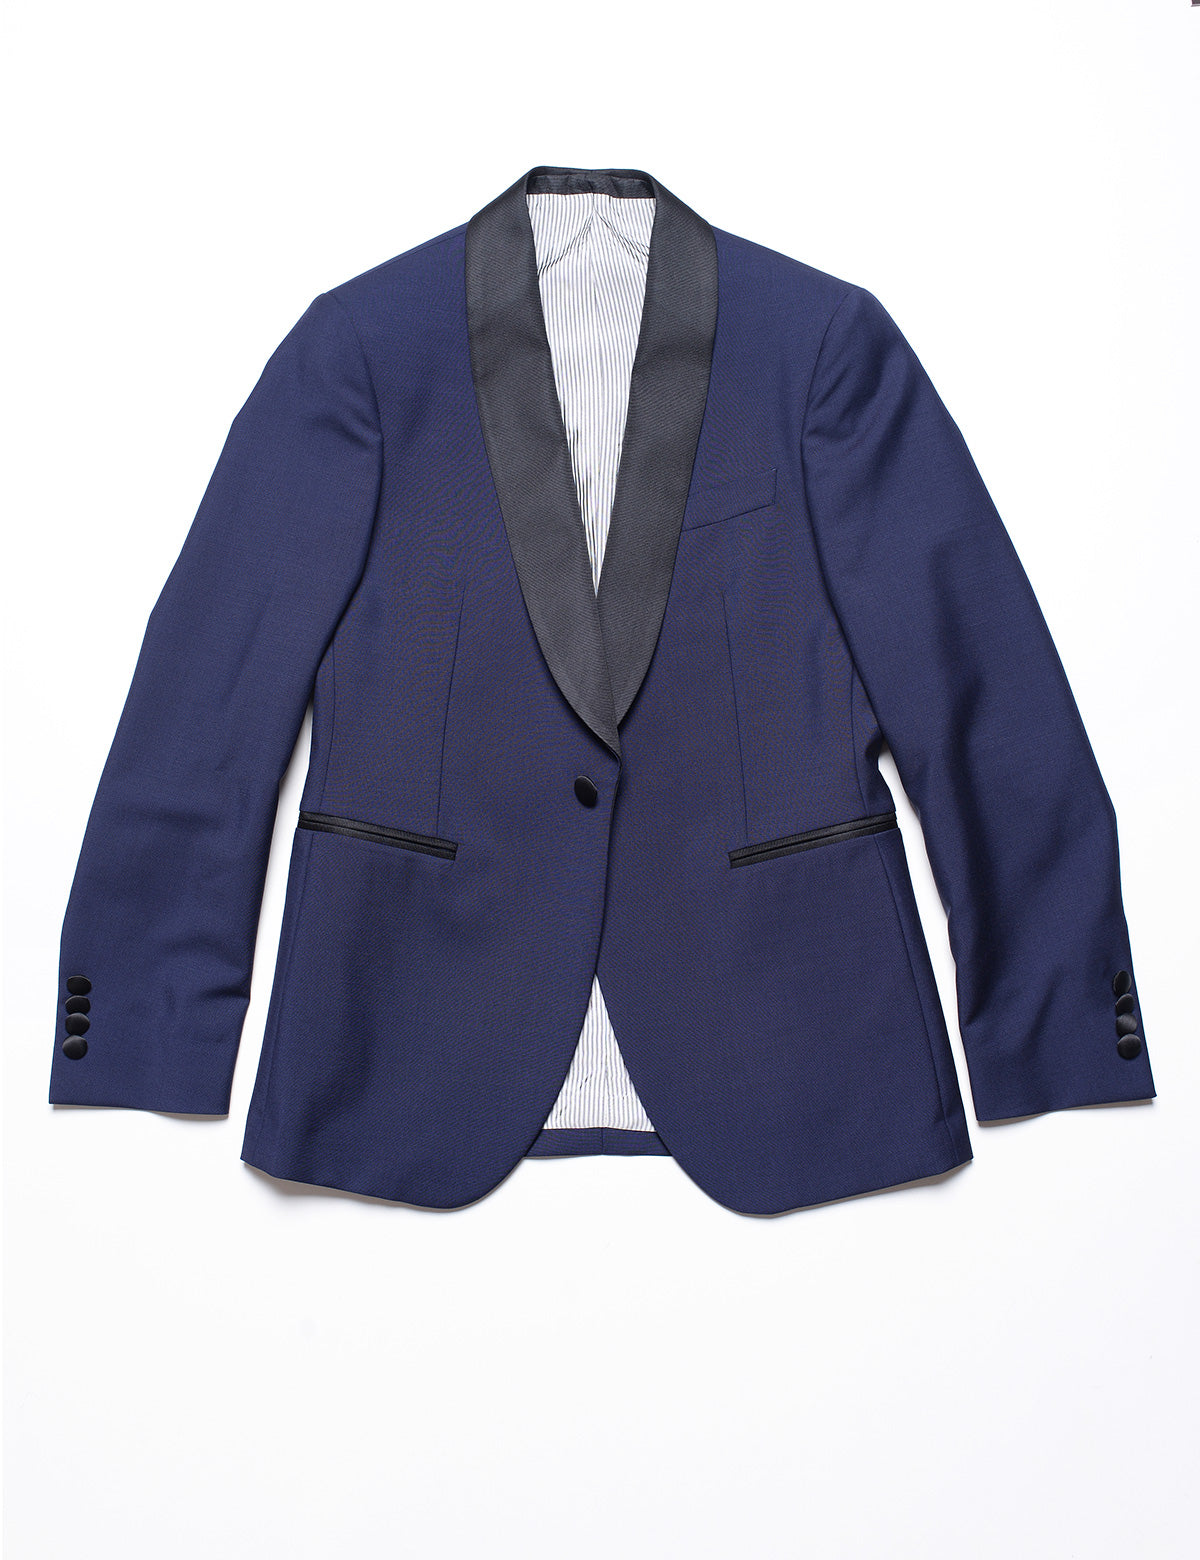 Brooklyn Tailors BKT50 Shawl Collar Tuxedo Jacket in Wool / Mohair - Ink Blue with Grosgrain Lapel full length flat shot